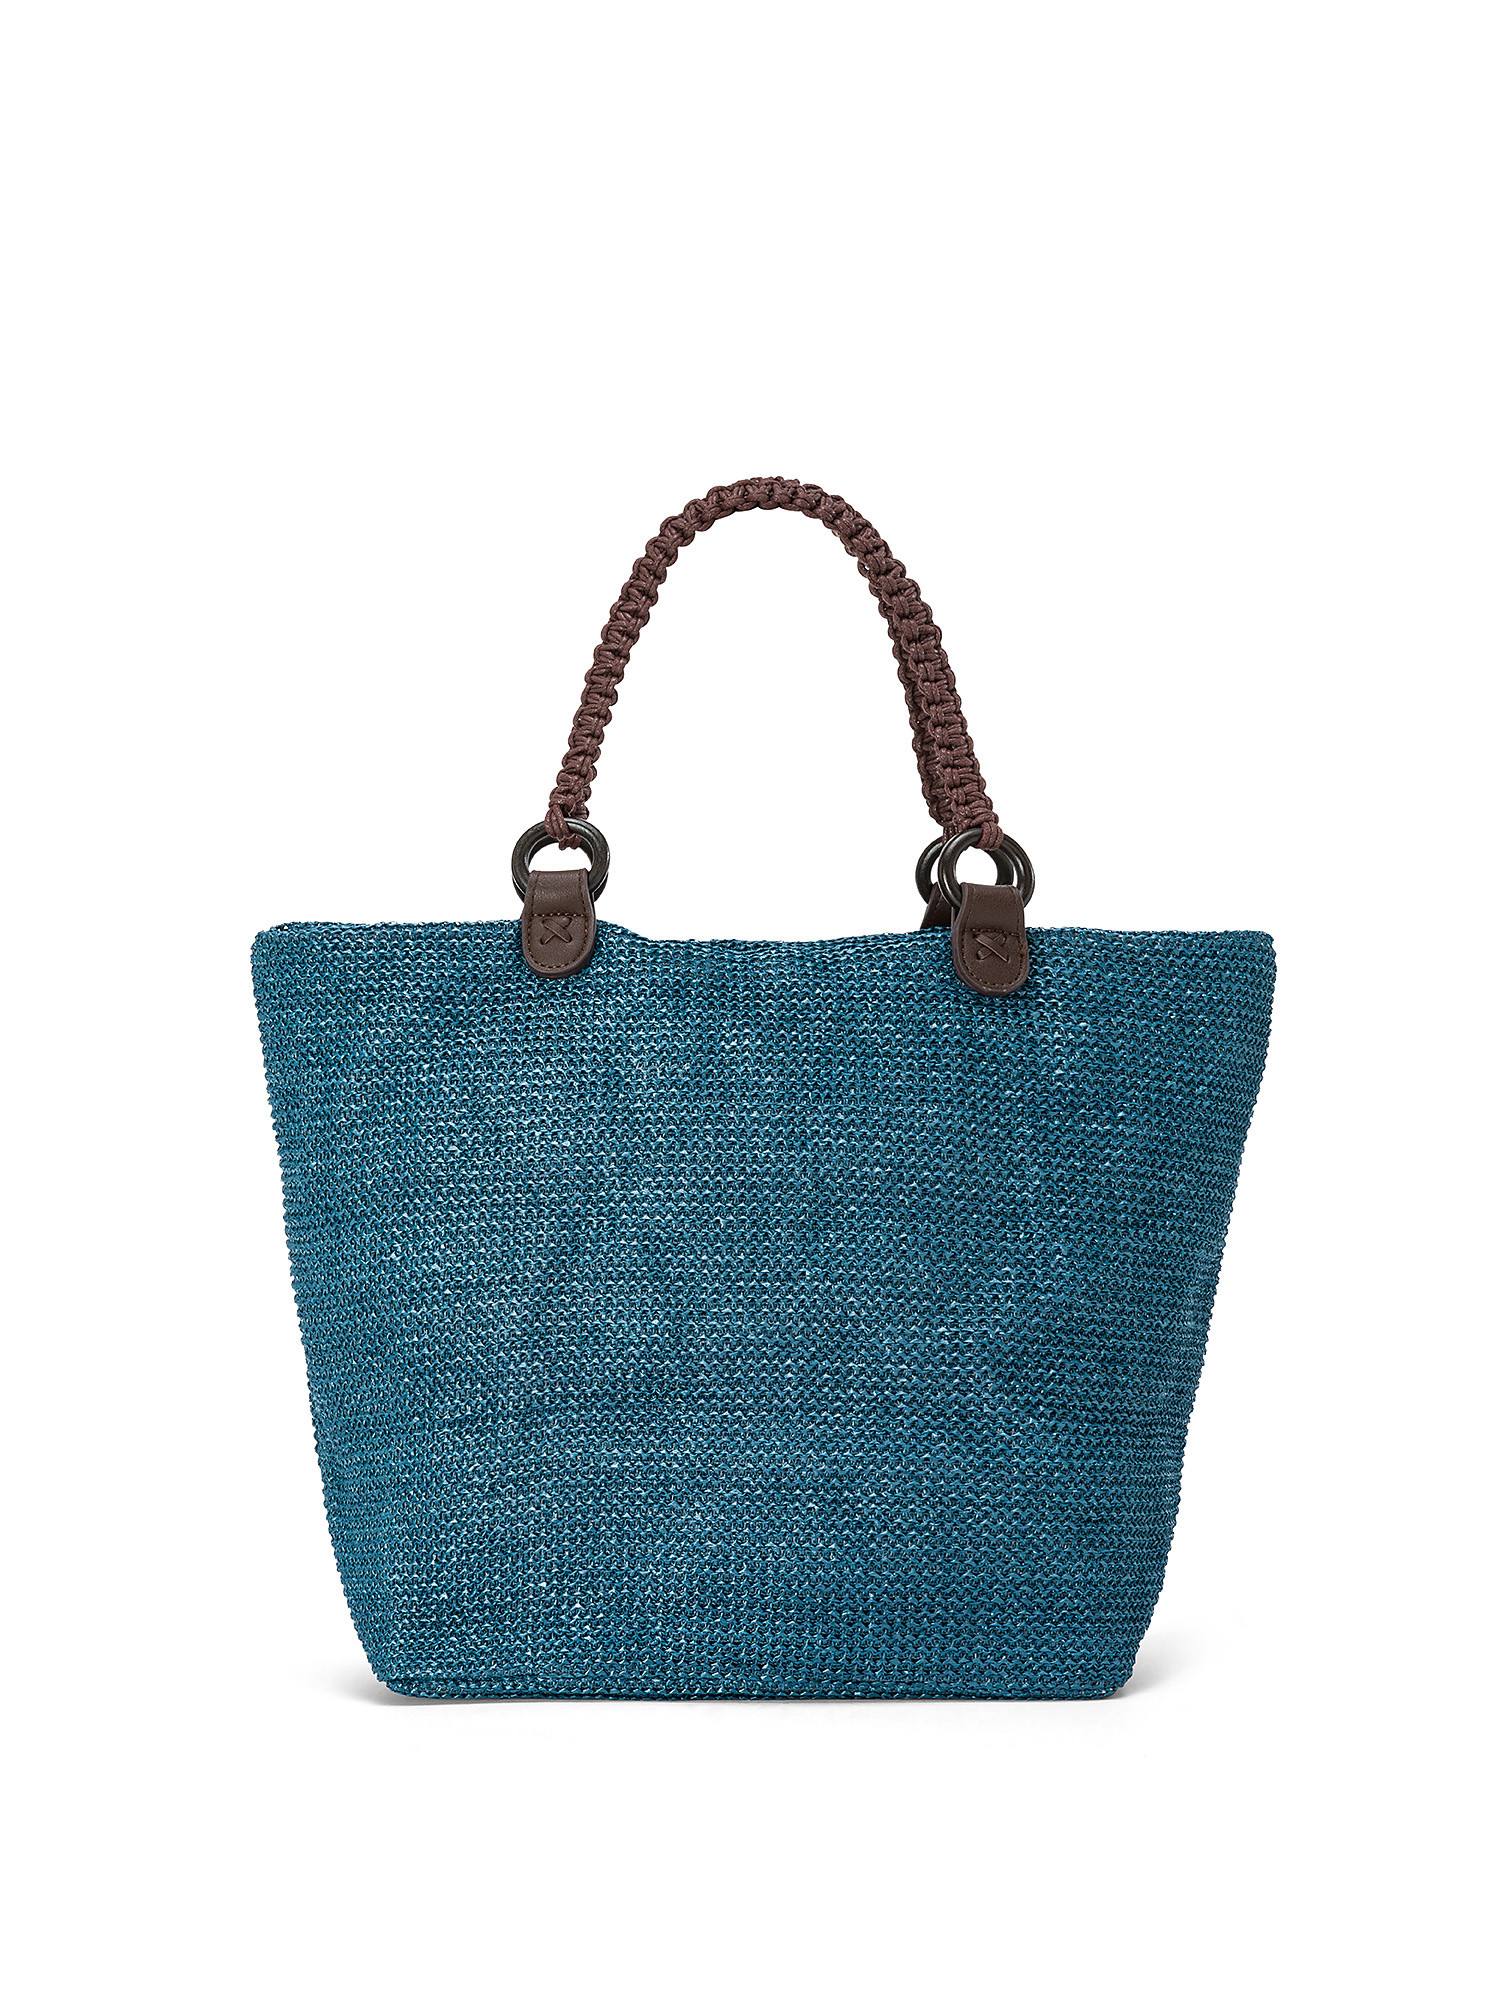 Koan - Shopping bag, Blue, large image number 0